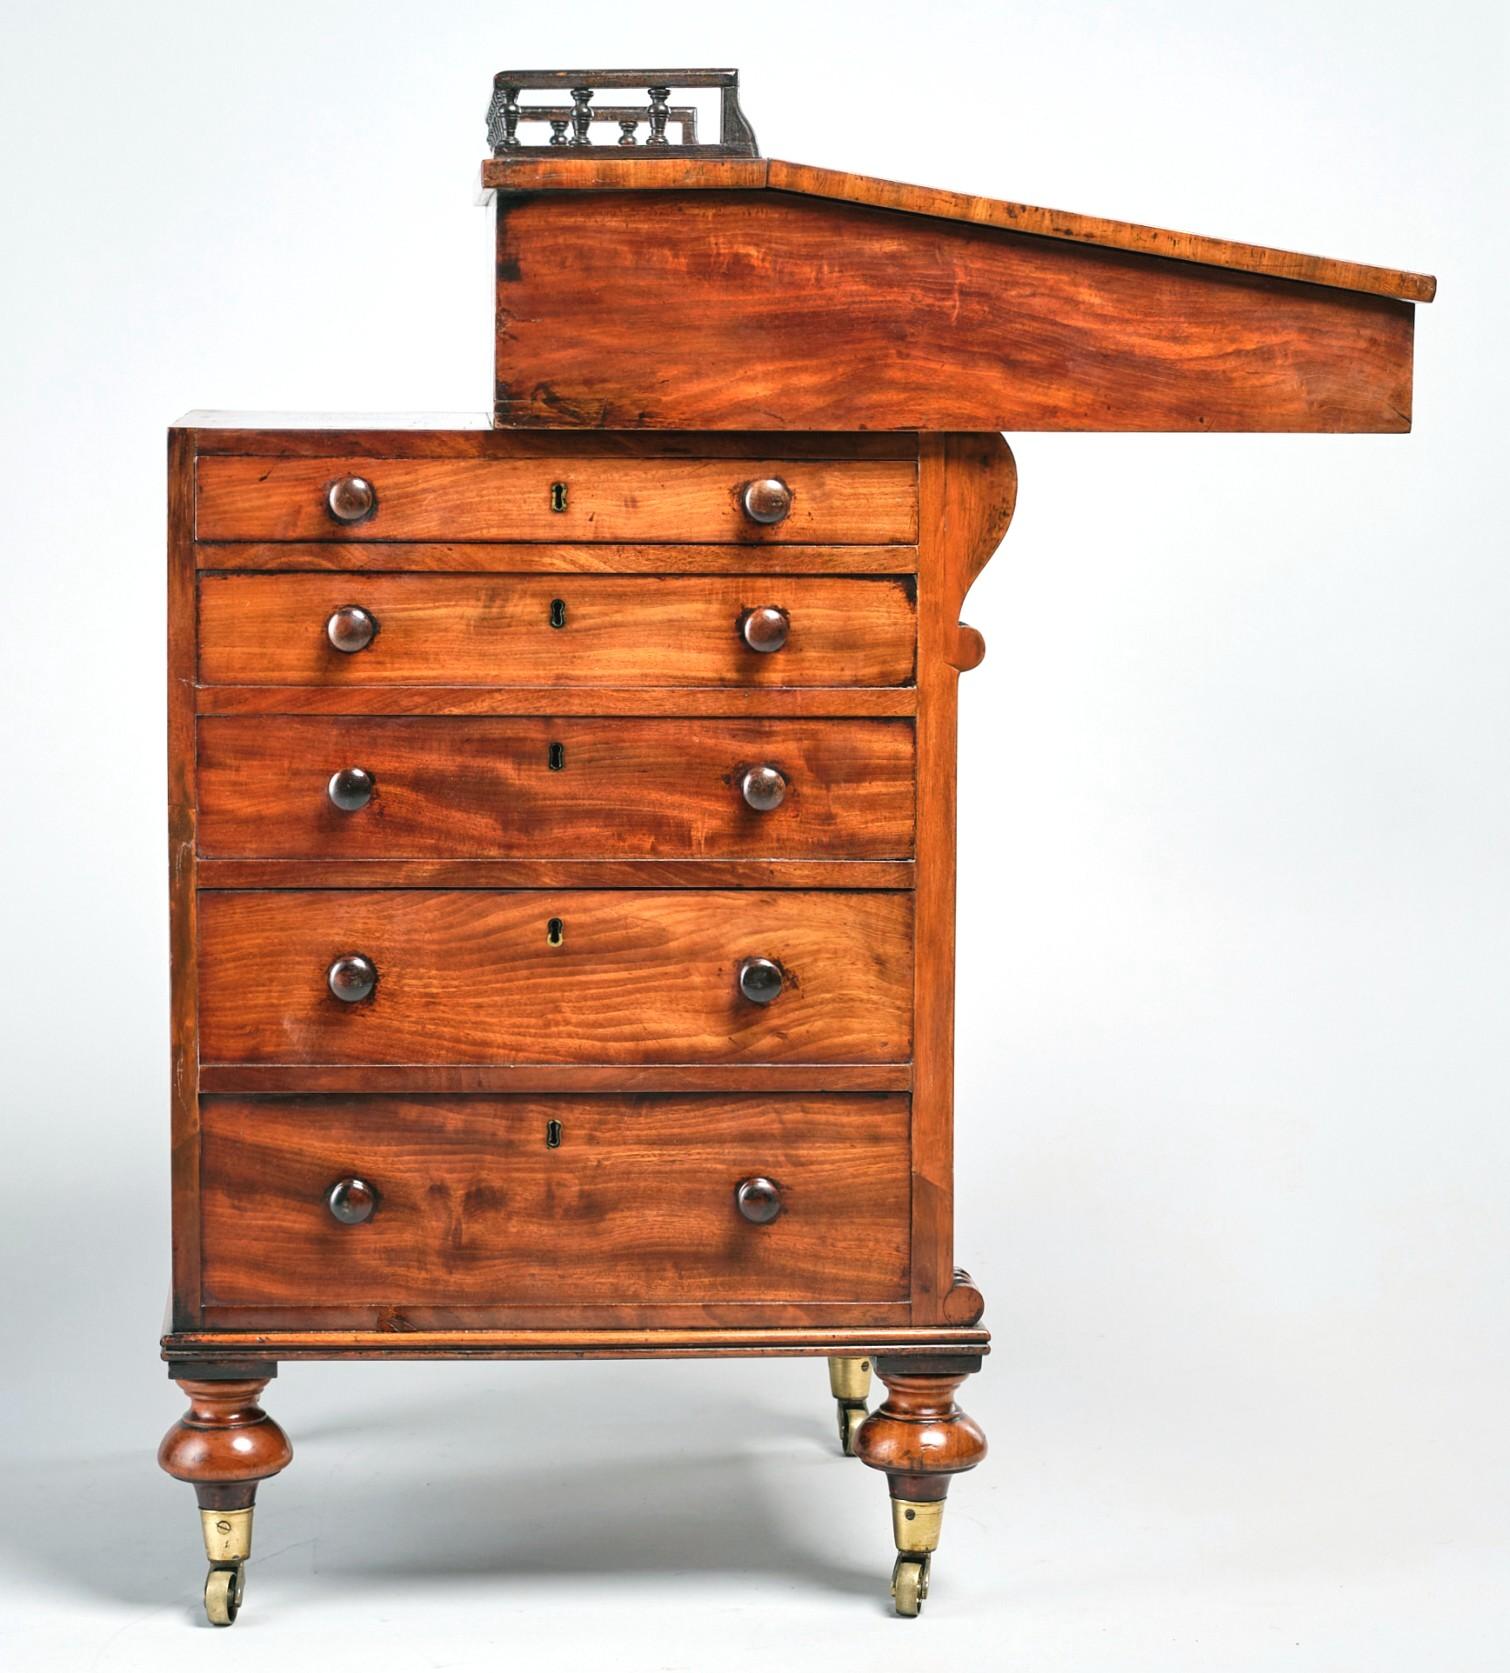 A Superior English Regency Period Davenport Desk in Figured Mahogany, Circa 1830 For Sale 8